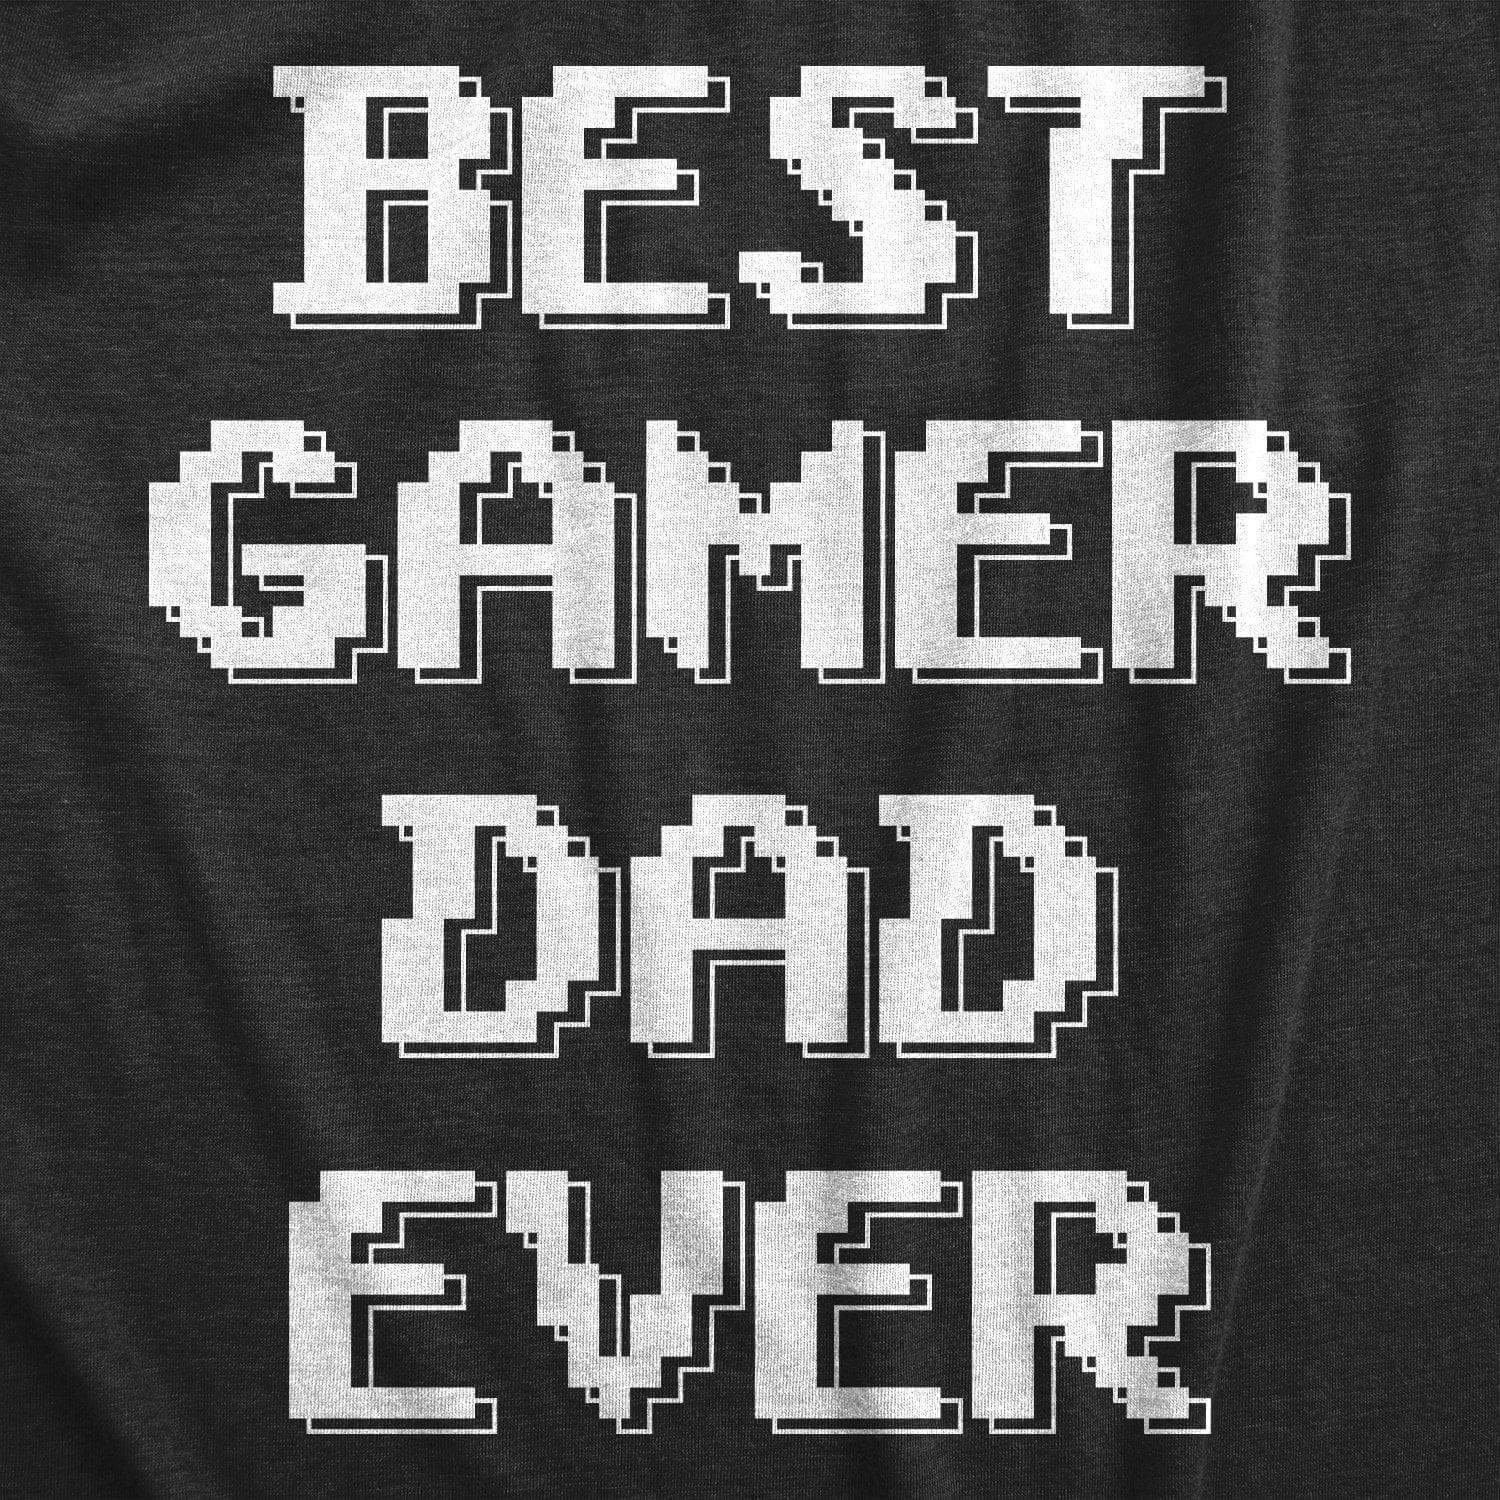 Best Gamer Dad Ever Men's Tshirt - Crazy Dog T-Shirts